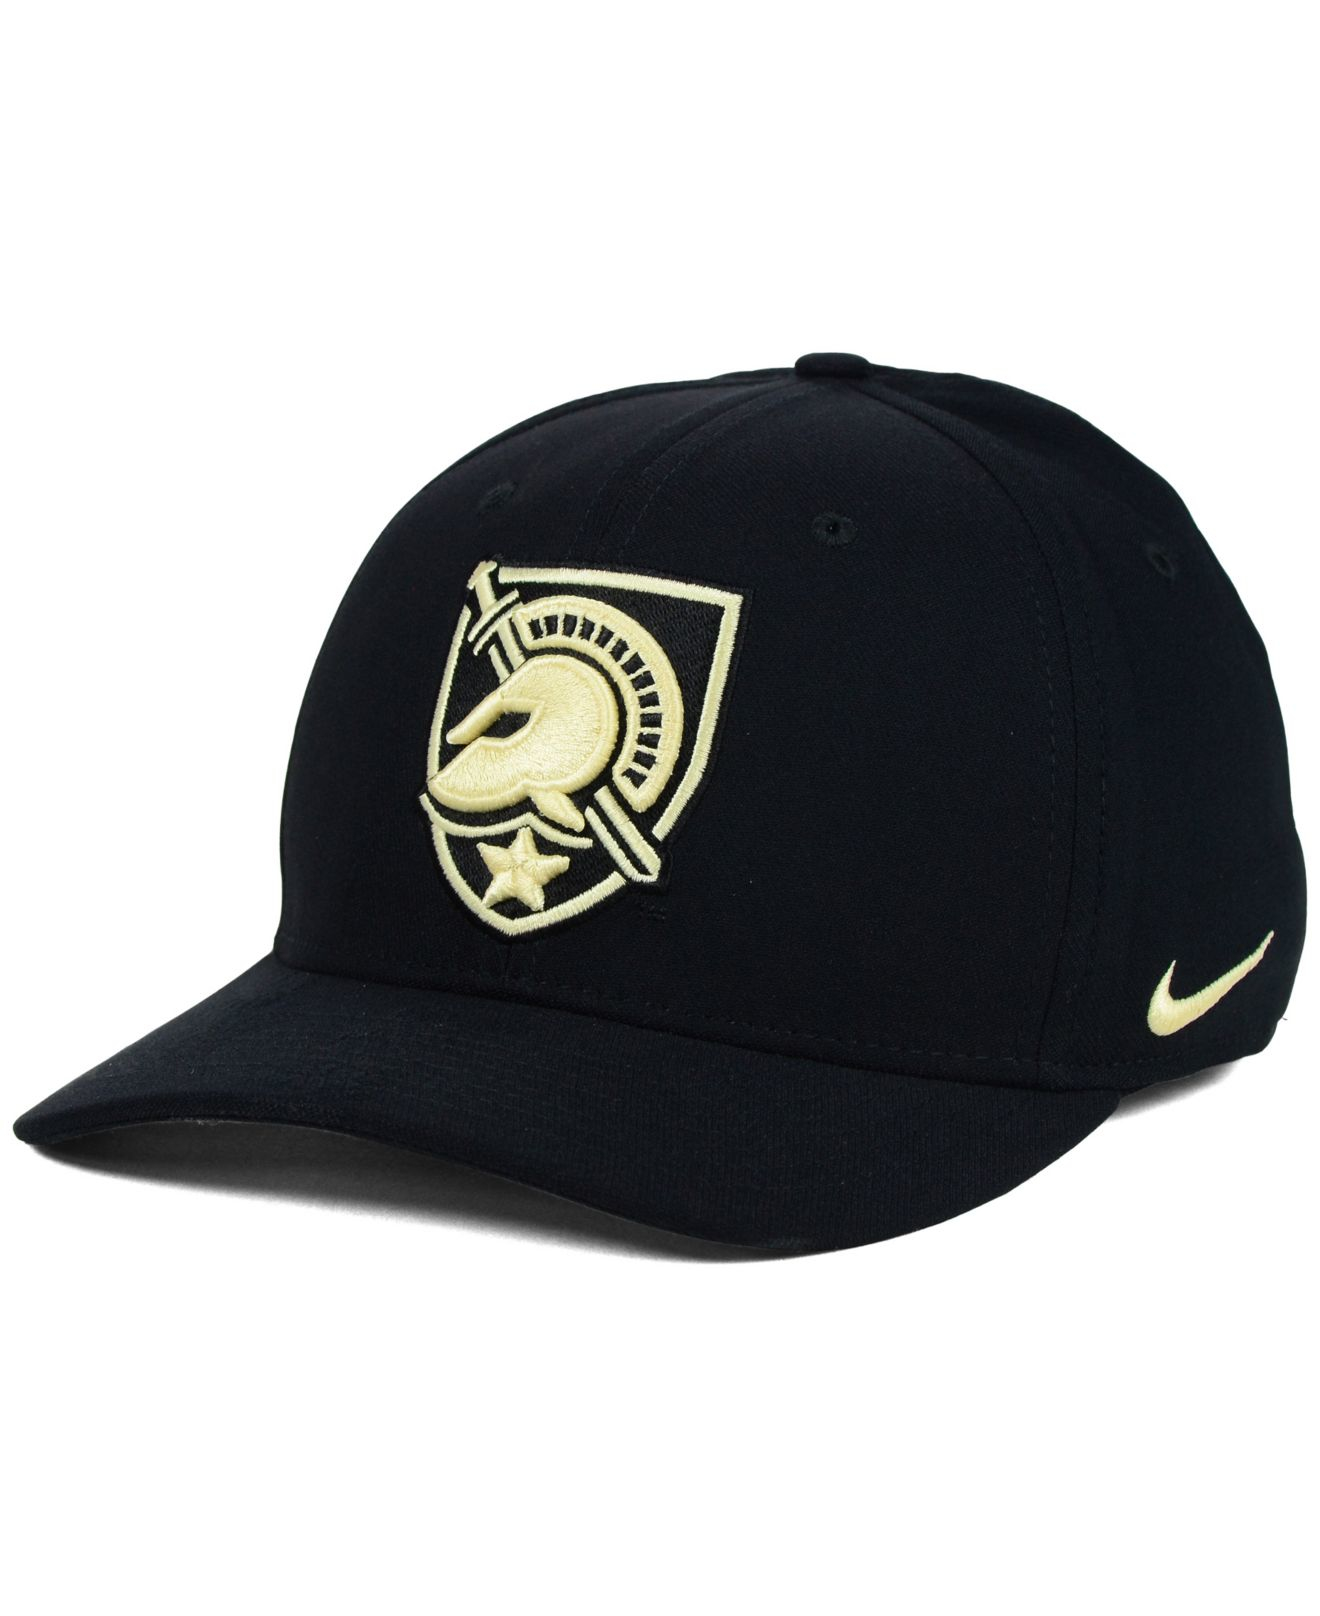 Nike Army Hat - Army Military